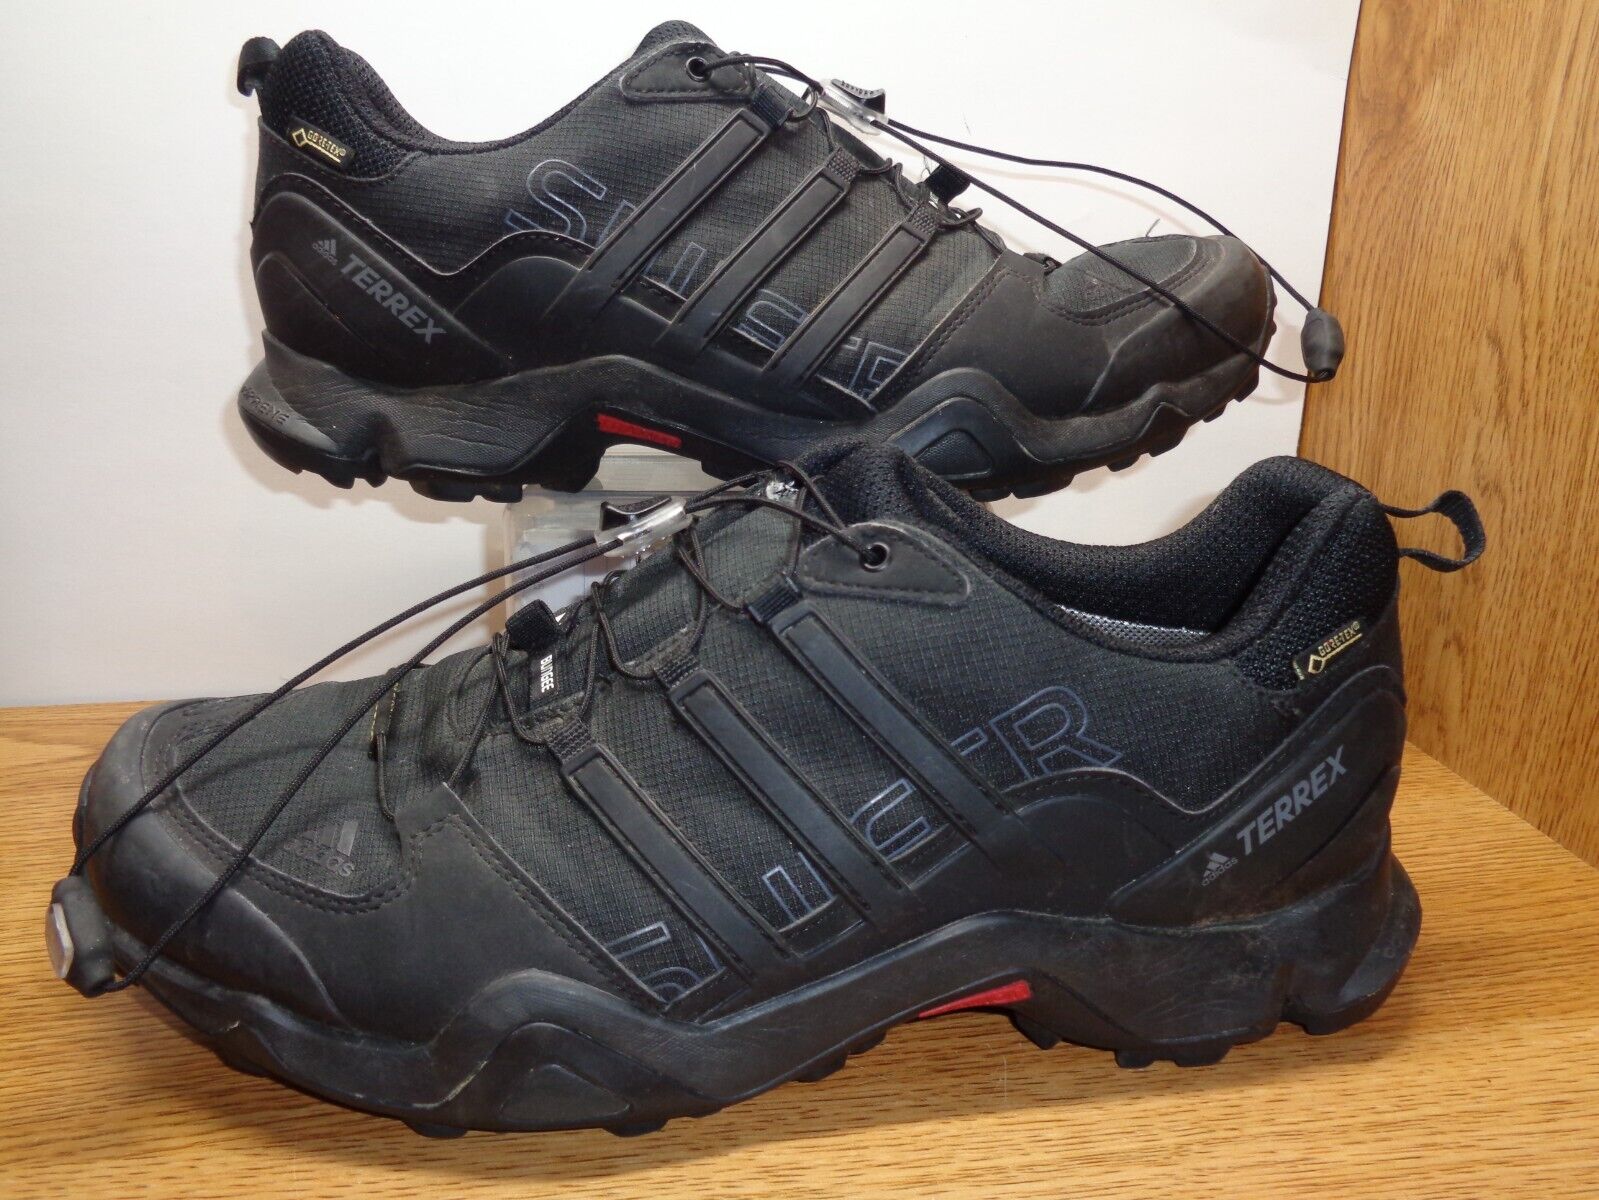 comestible dispersión fórmula Adidas Terrex Swift R GTX (Gore-Tex) Hiking Shoes Size 10.5 Black | eBay